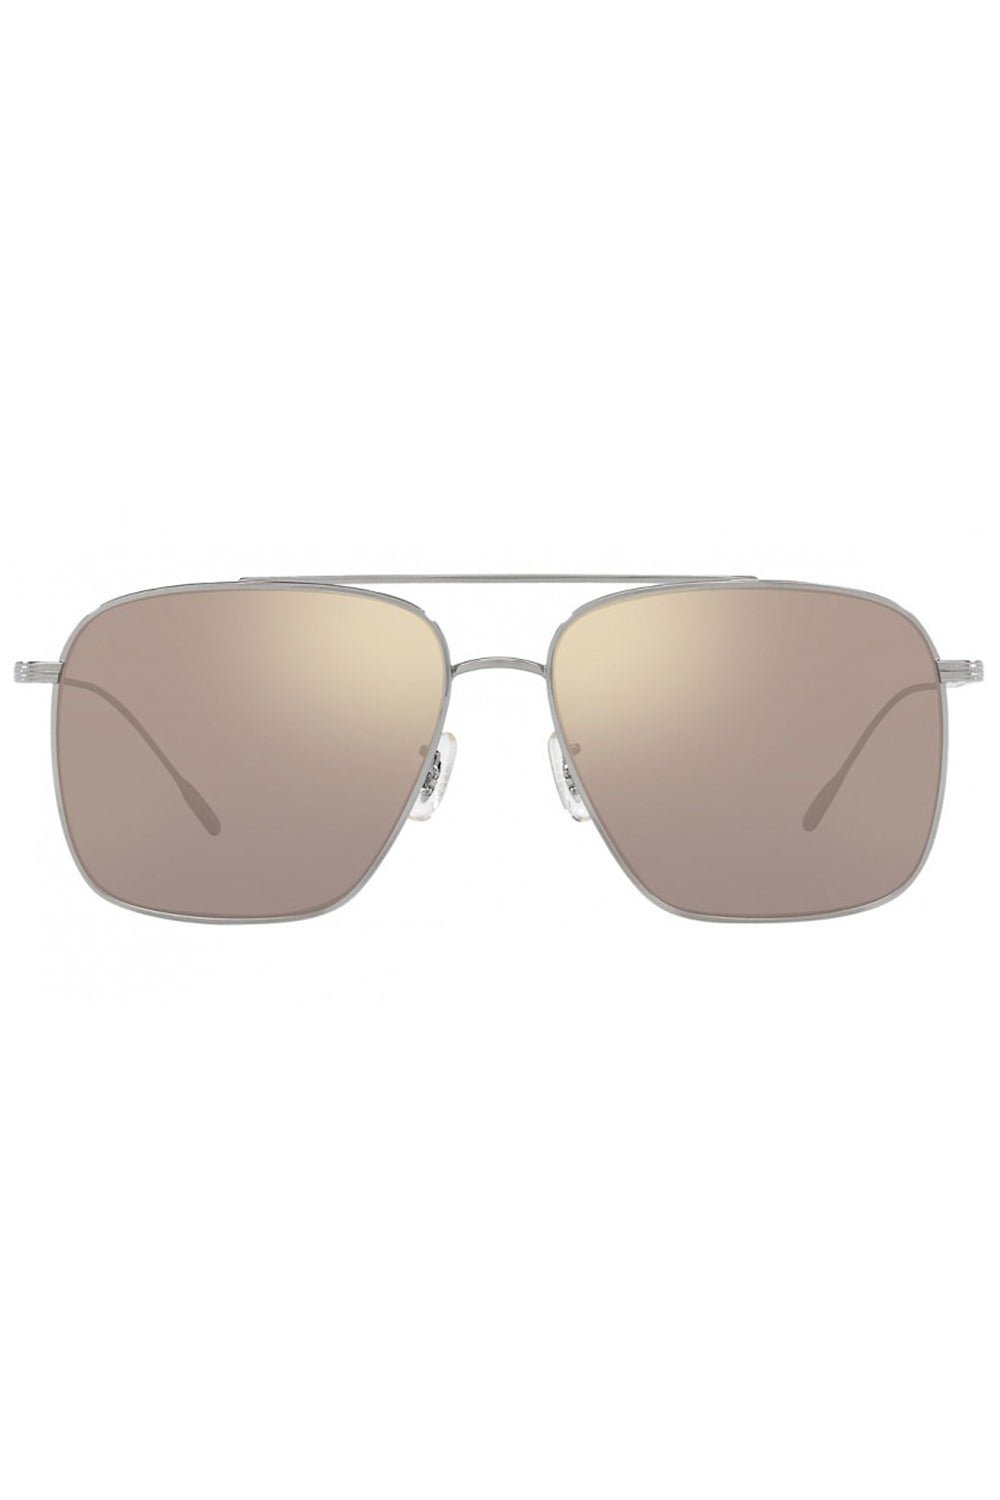 OLIVER PEOPLES-Dresner Sunglasses-TAUPE